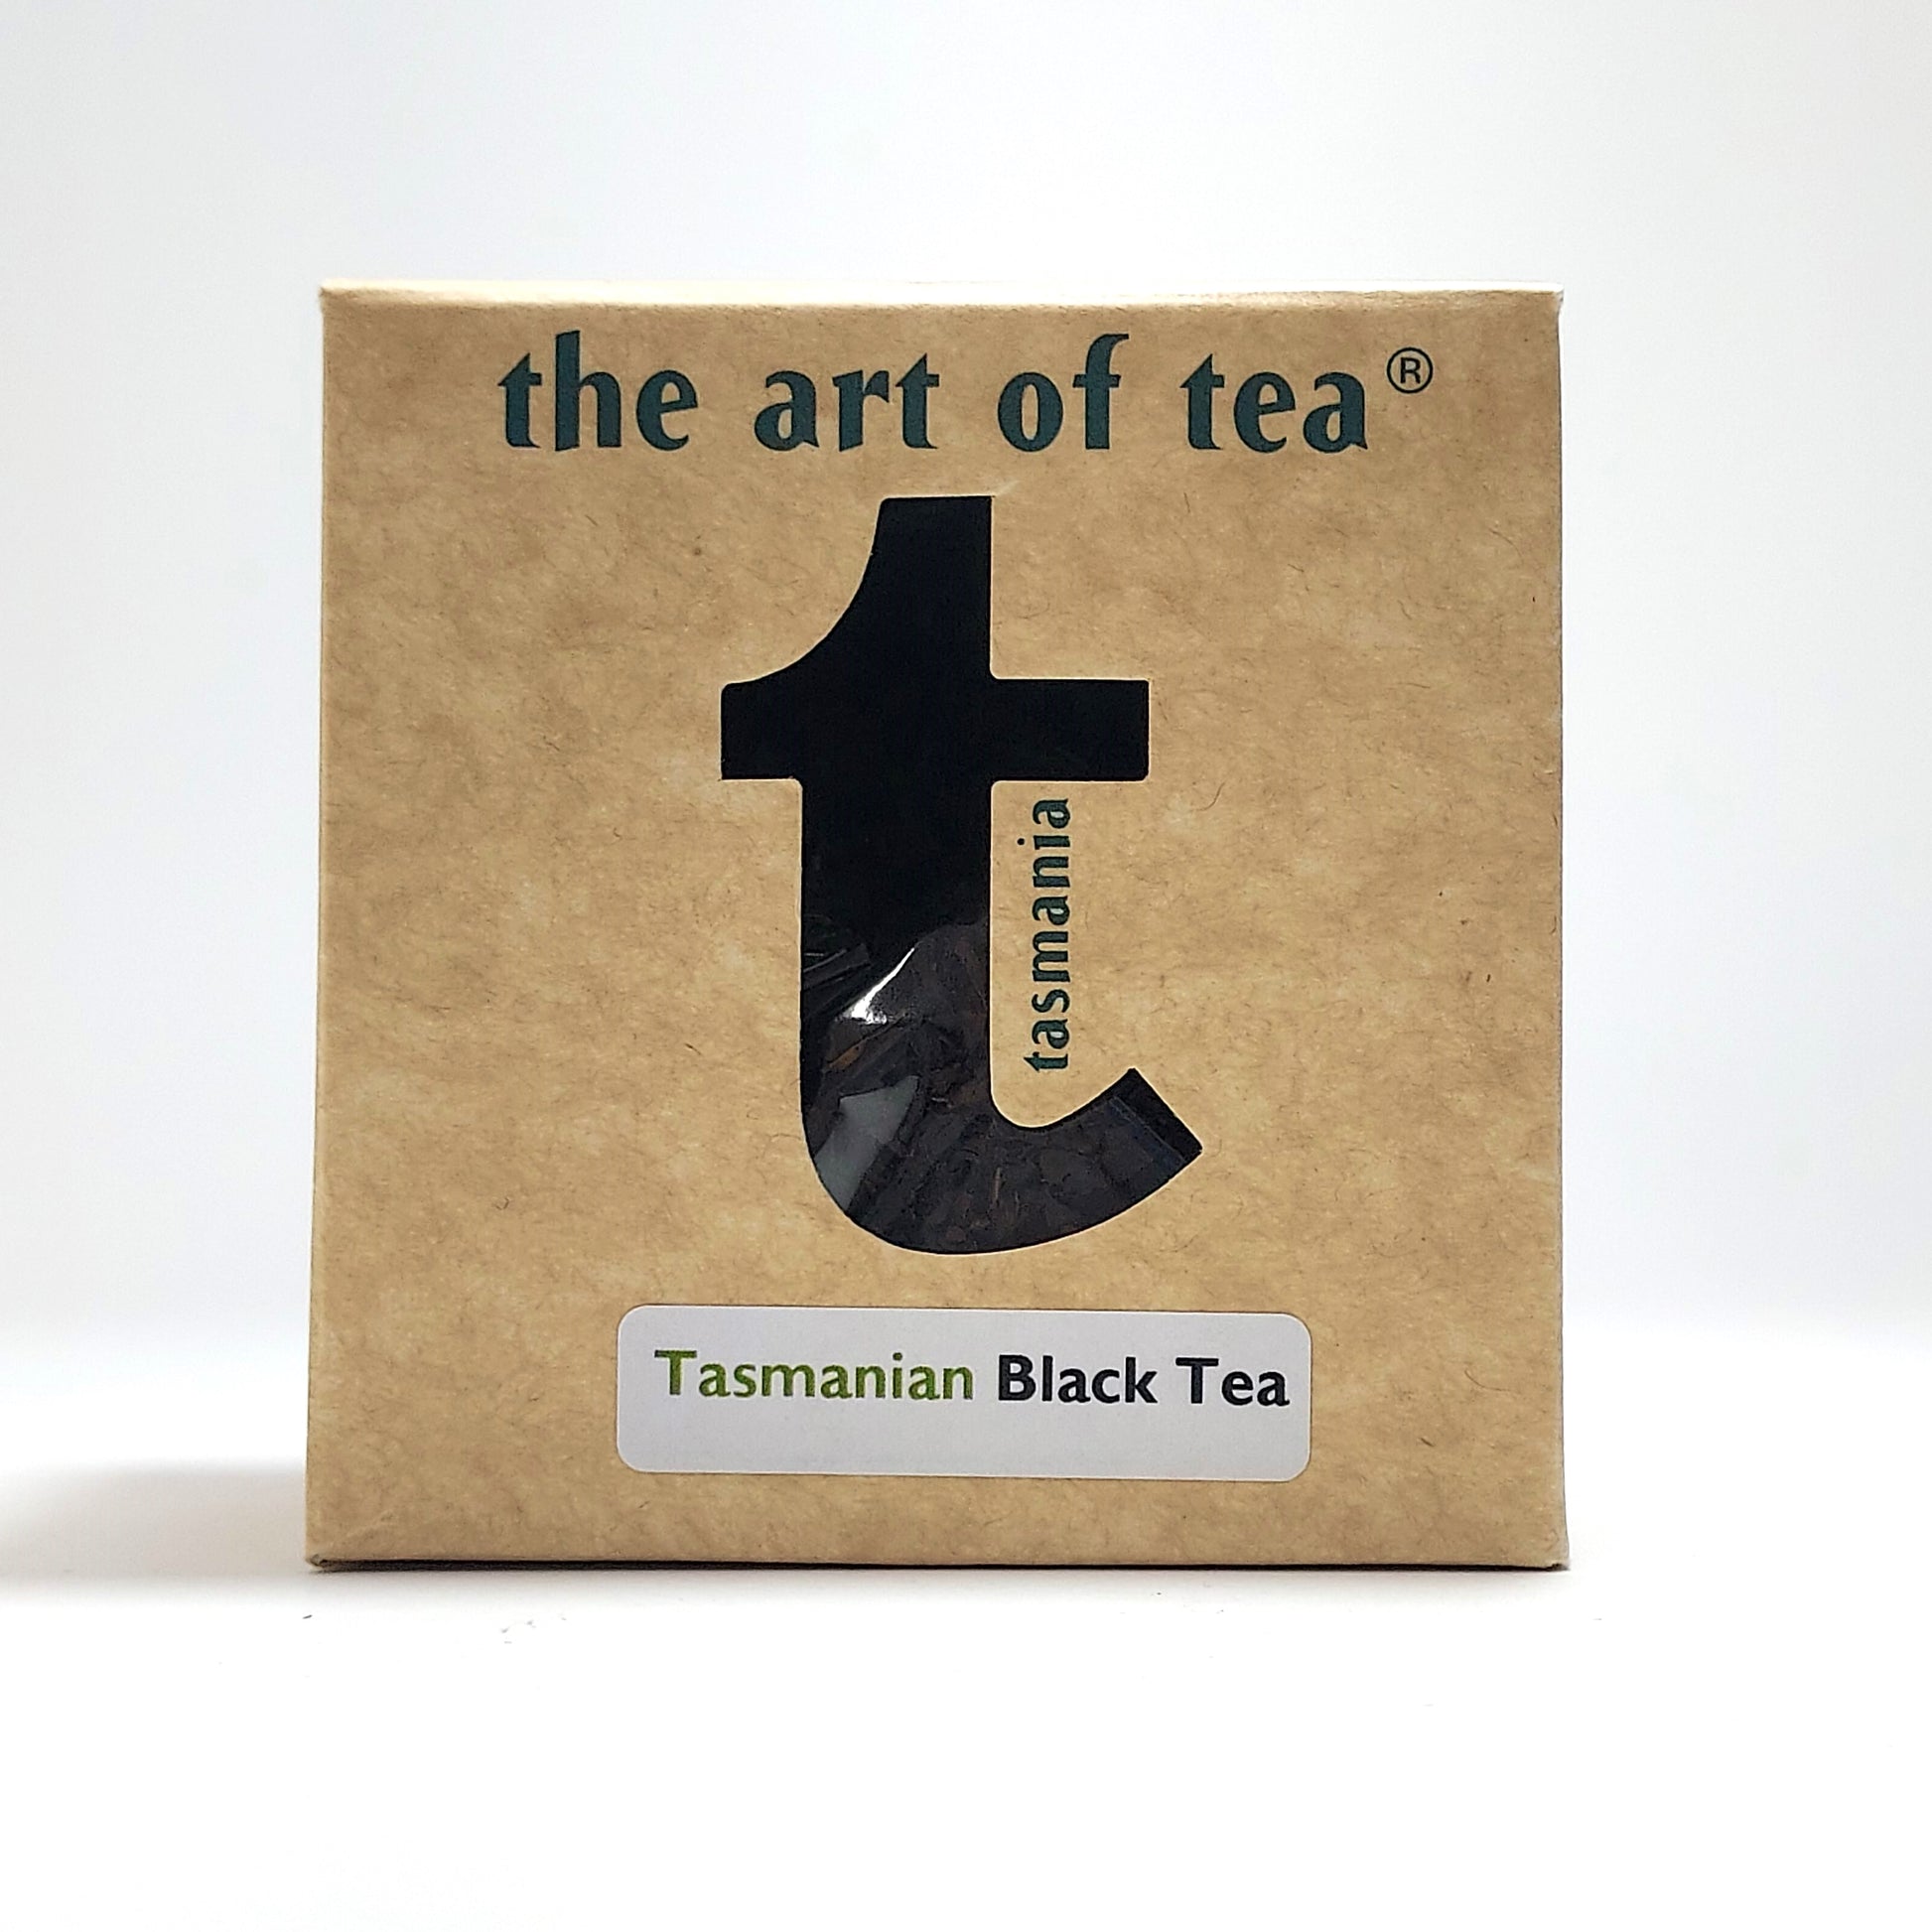 a small box of Tasmanian black tea grown by the art of Tea Tasmania